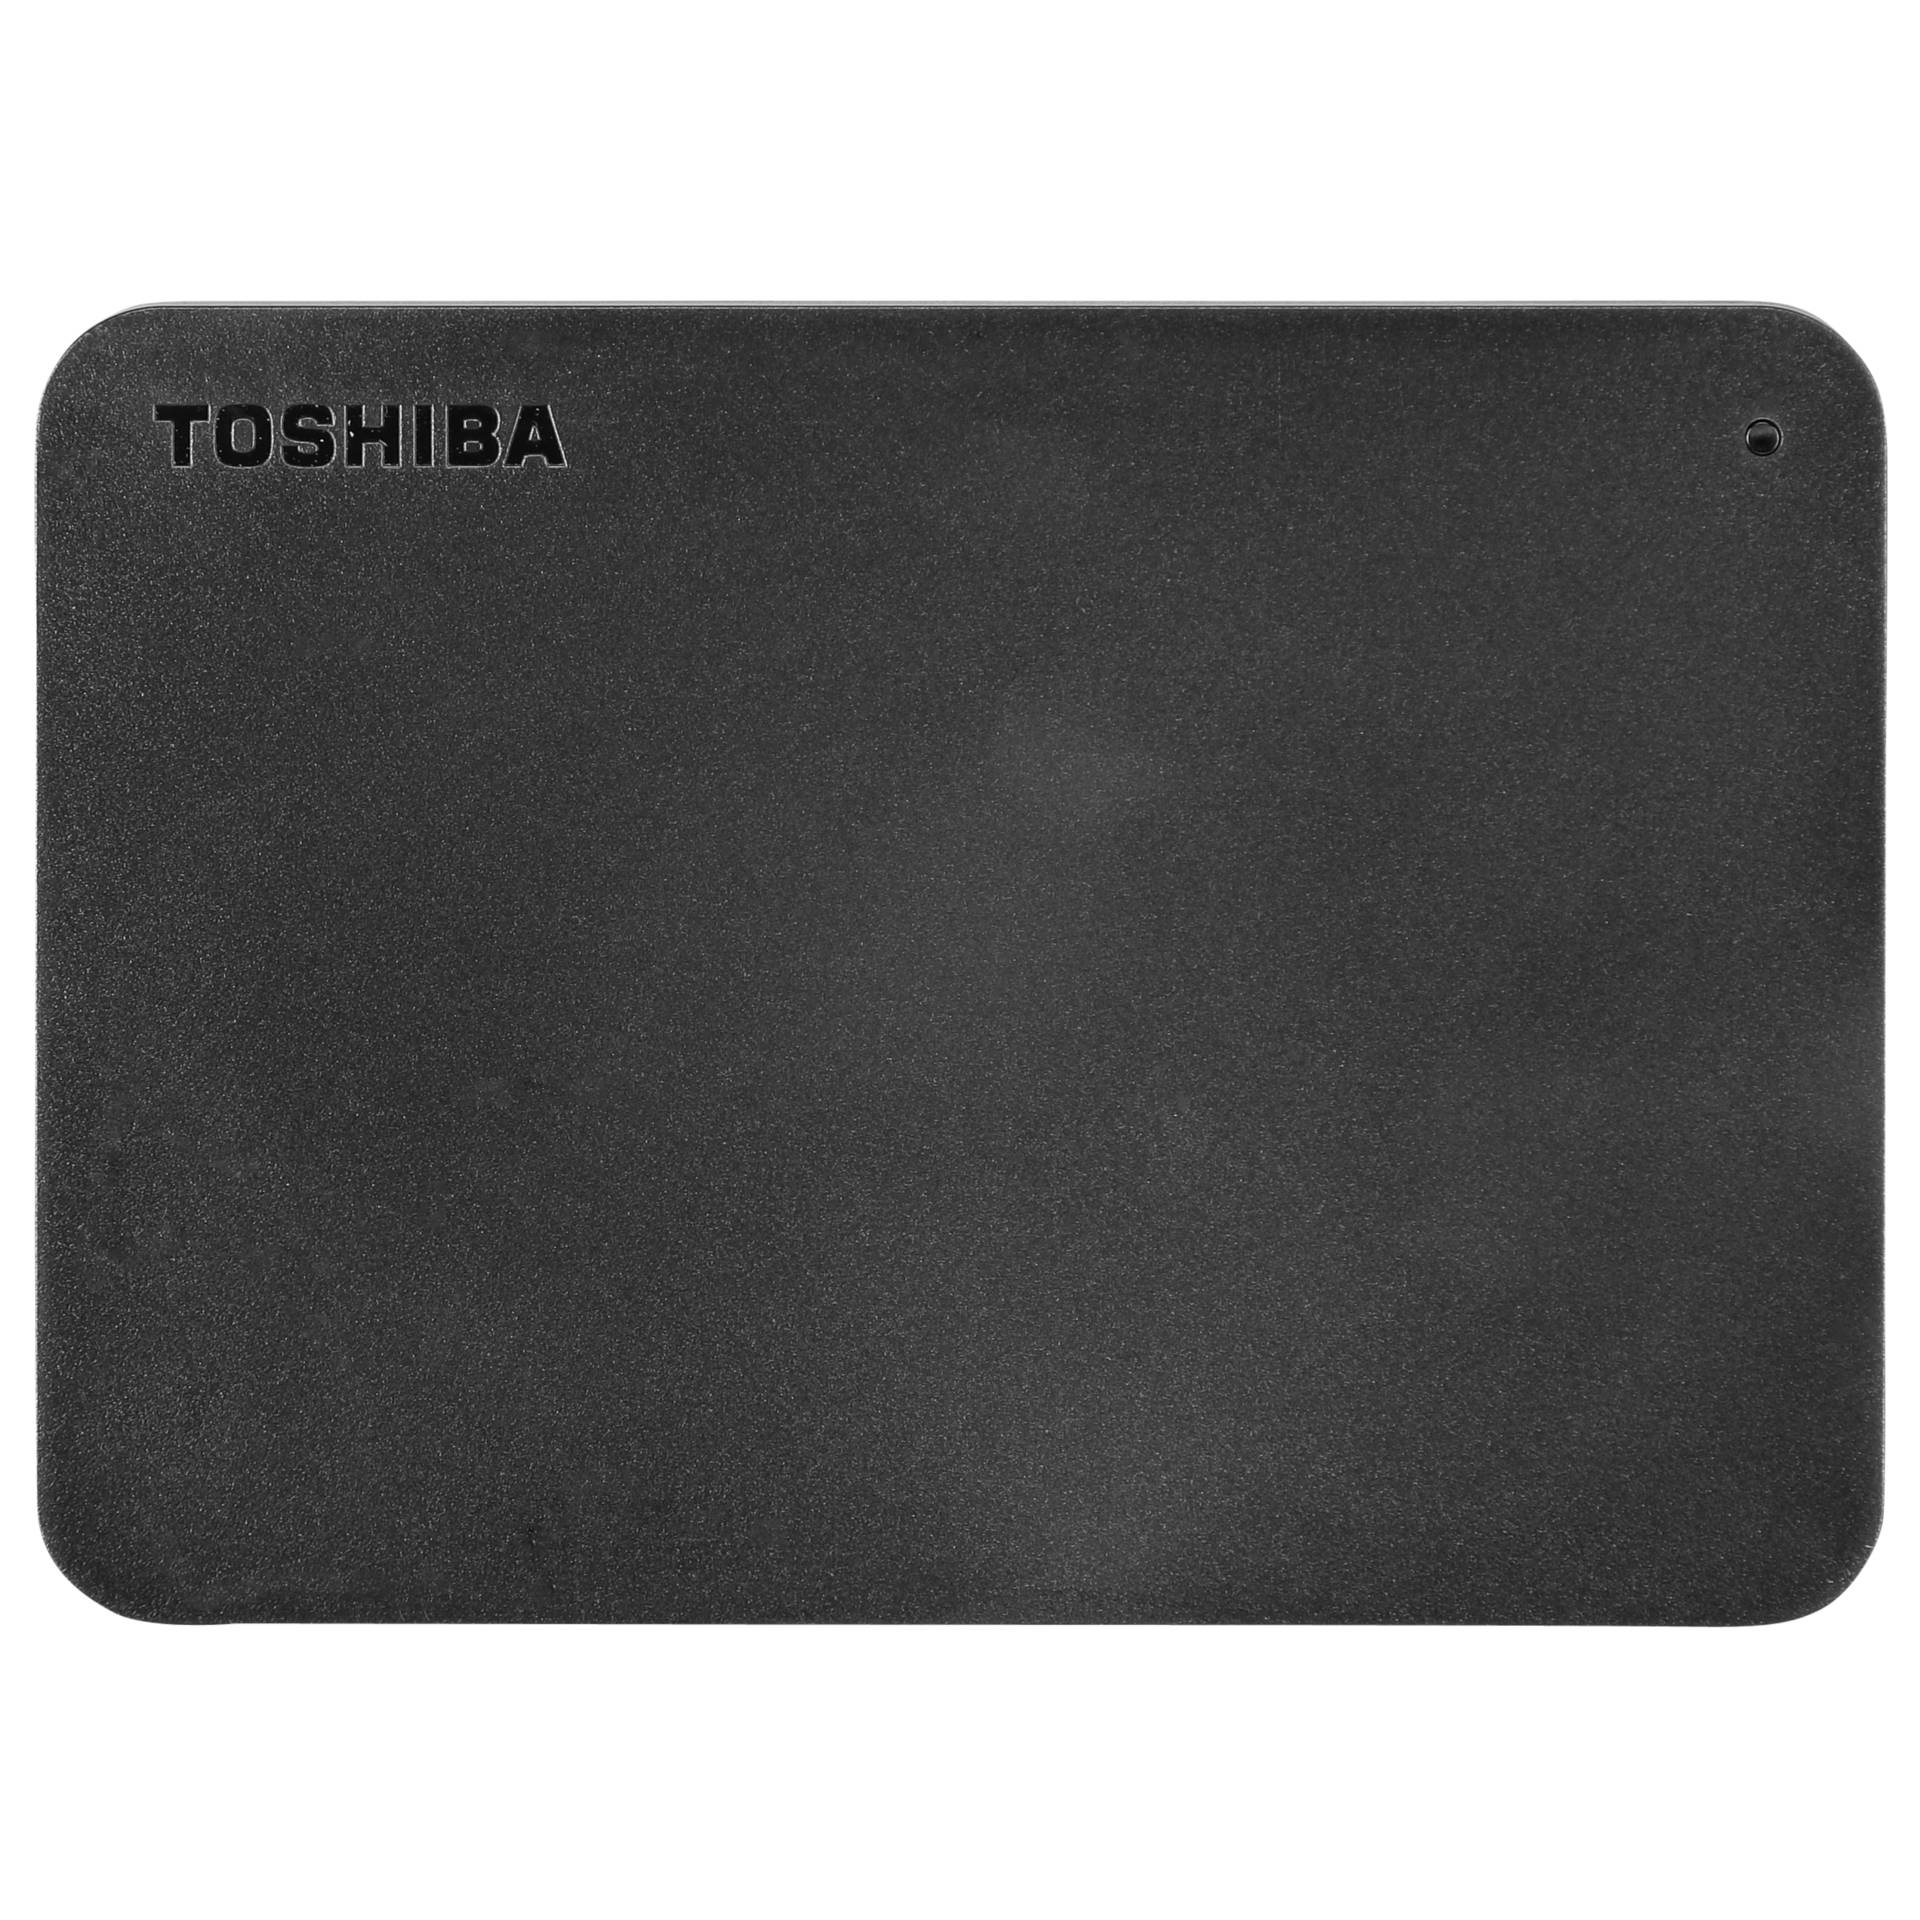 1.0 TB HDD Toshiba Canvio Basics externe HDD, 1x USB 3.0 Micro-B